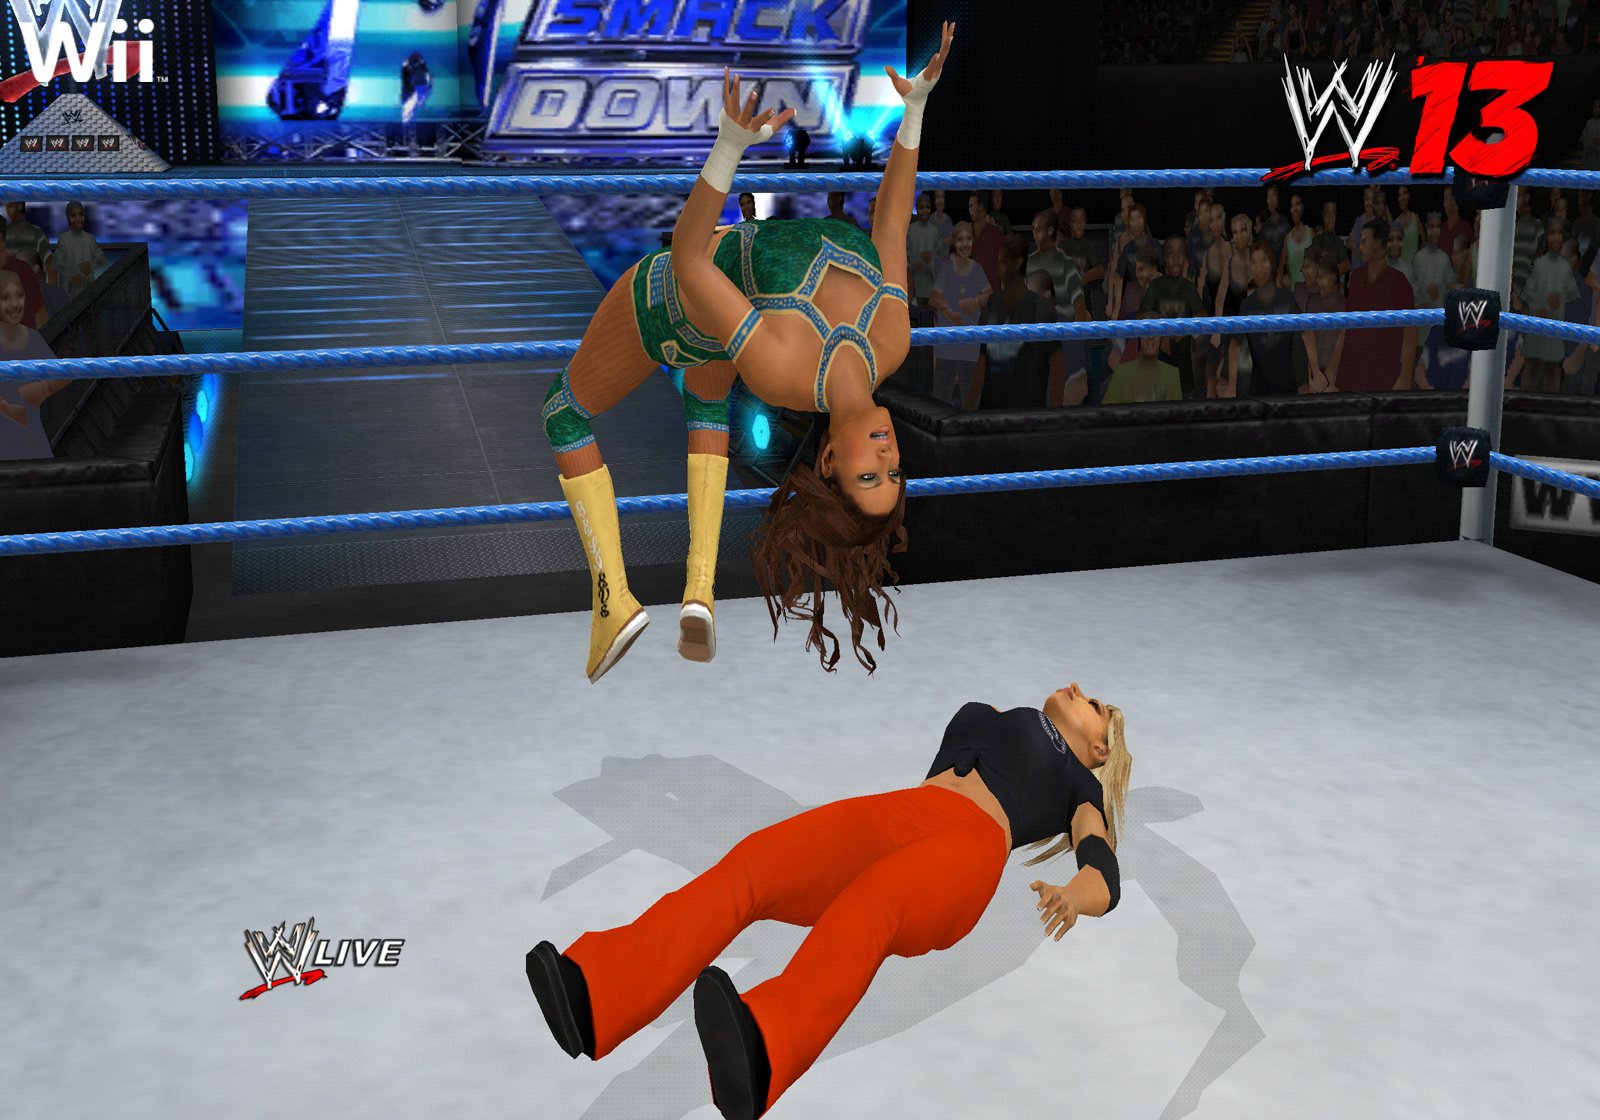 WWE '13 (Wii) Game Profile | News, Reviews, Videos & Screenshots